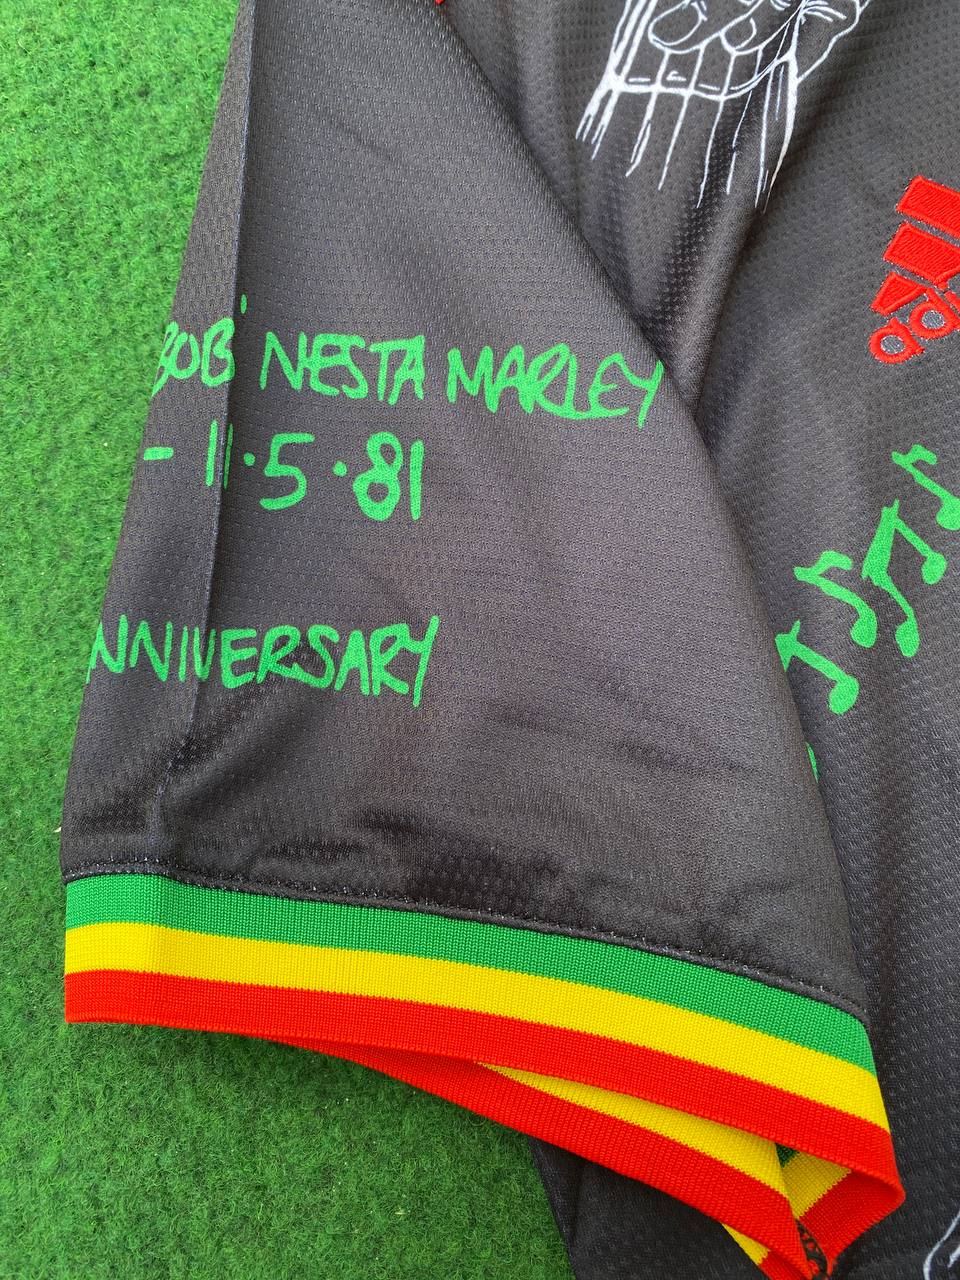 AFC Ajax x Bob Marley Three Little Birds Gedenk-Sonderedition Fußballtrikot Maillot Trikot Maglia Camiseta